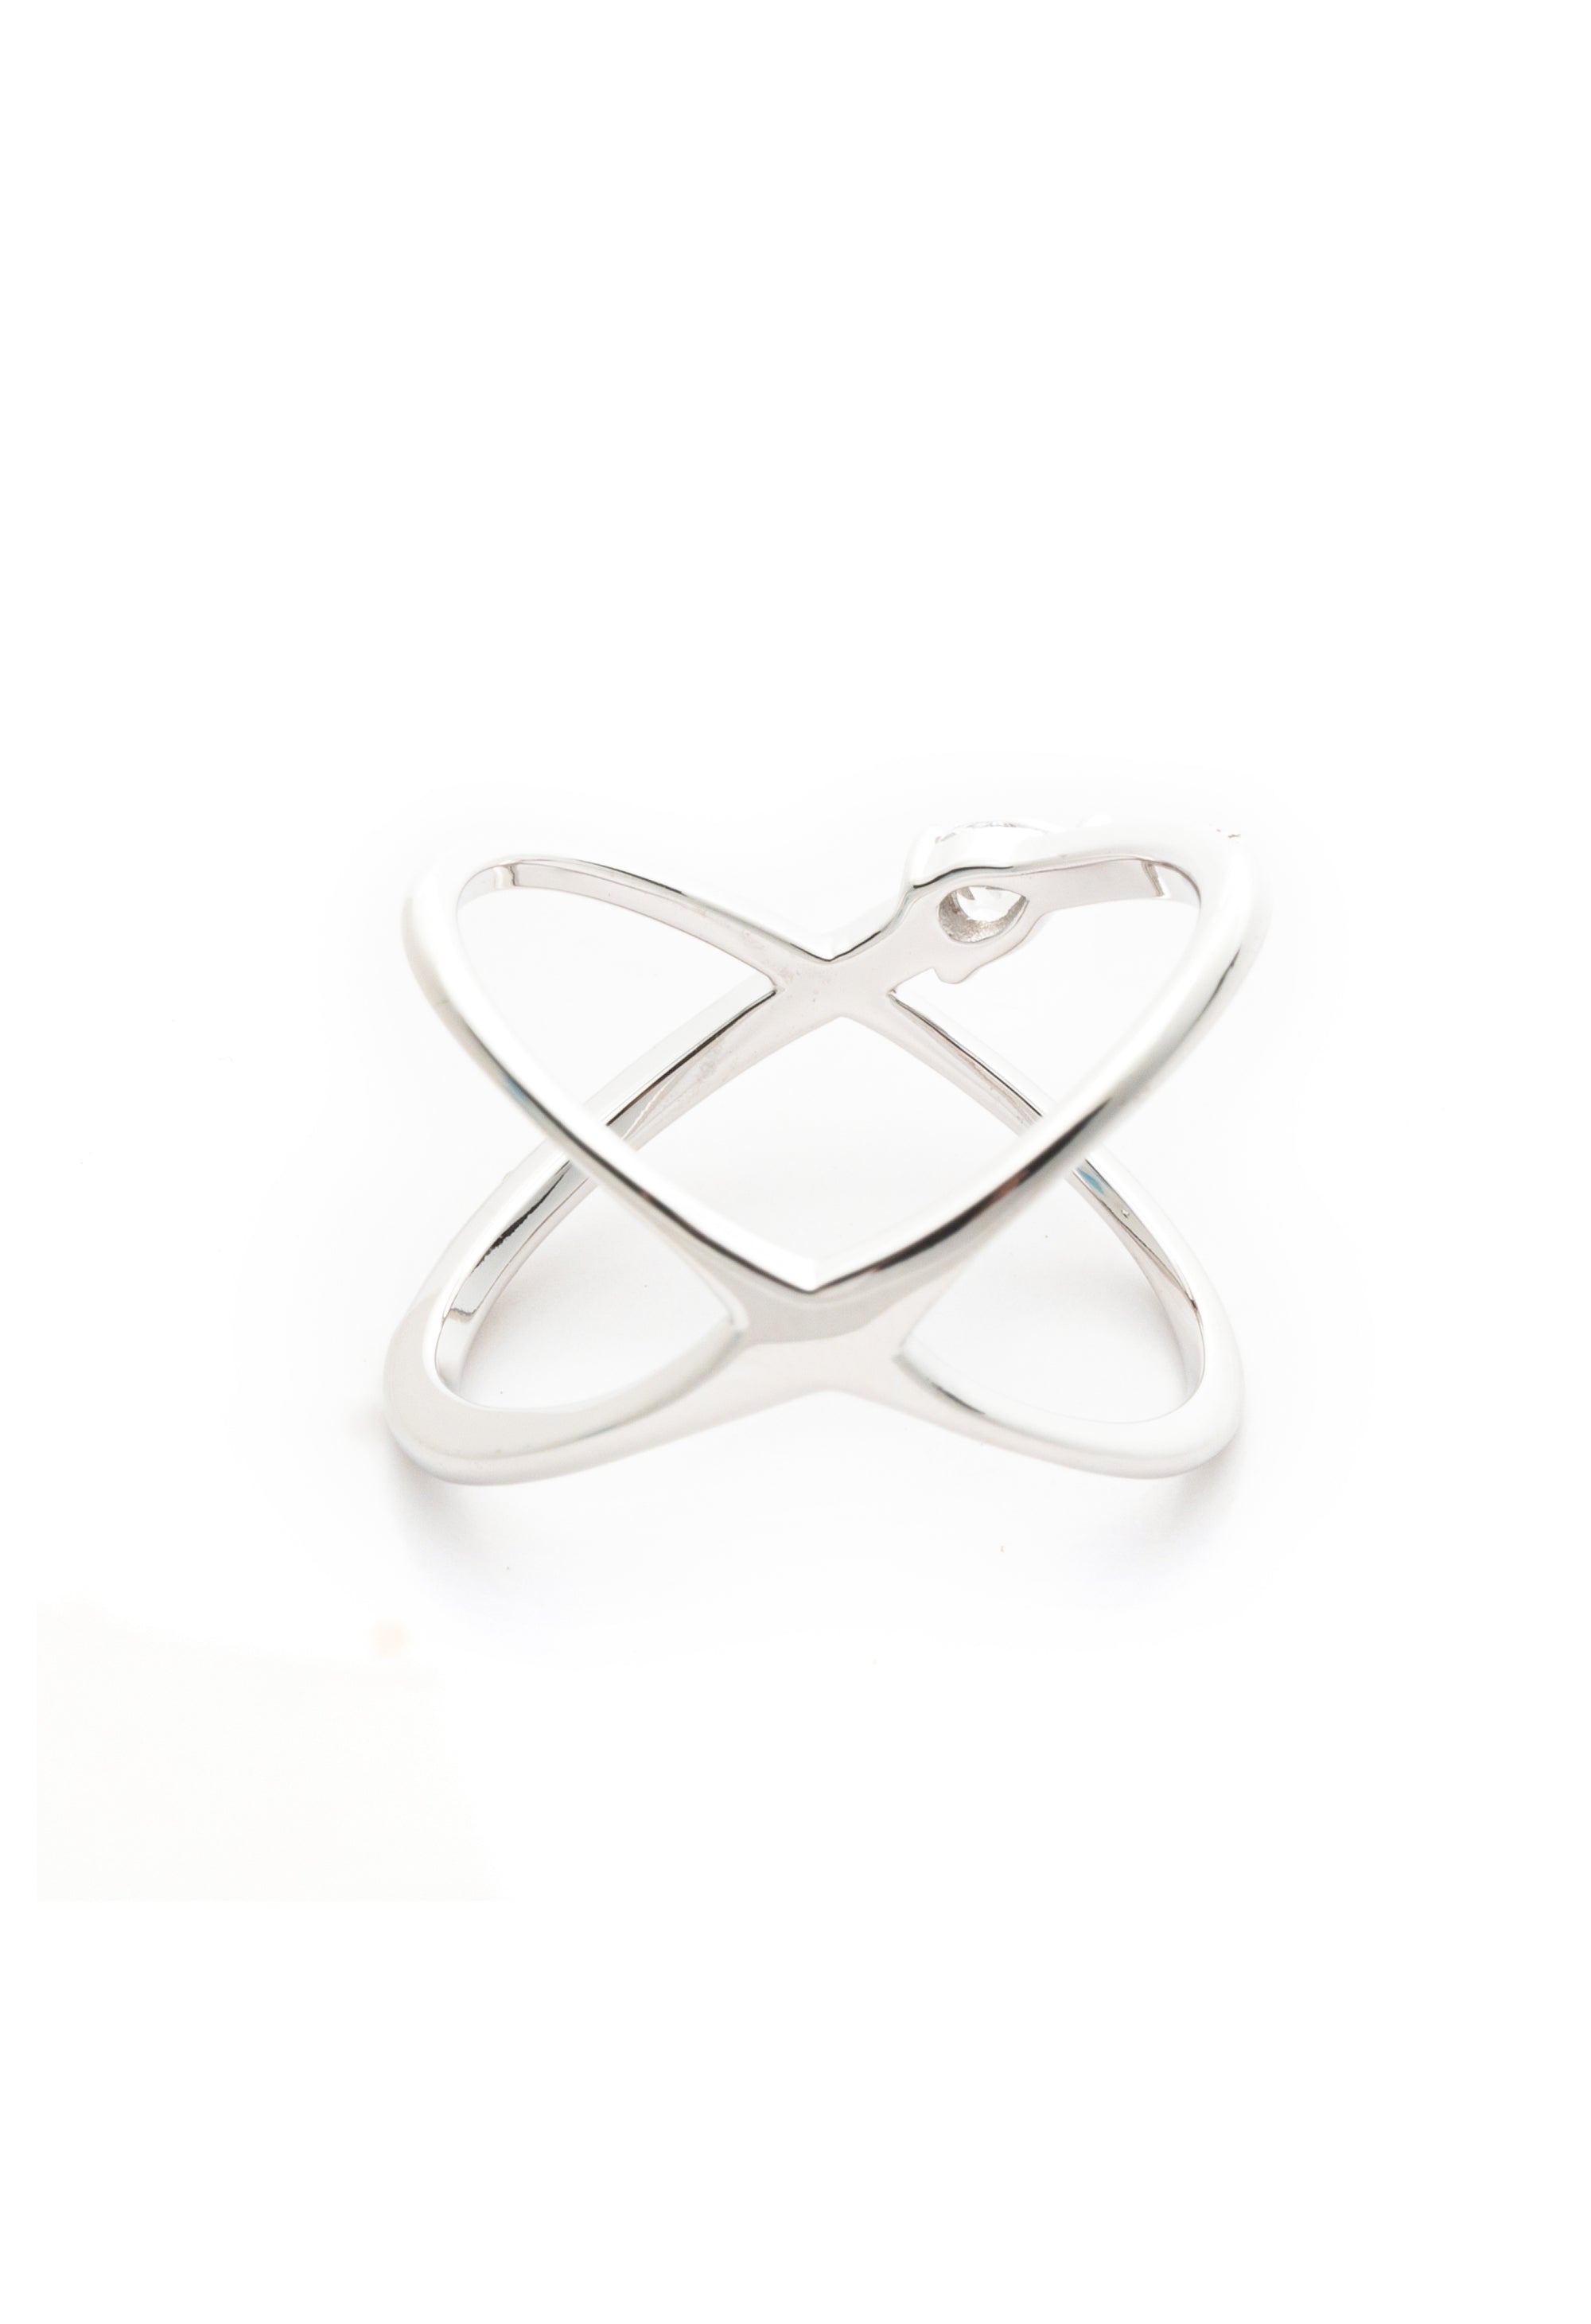 Lumi Cross Ring - Sterling Silver - KESTAN